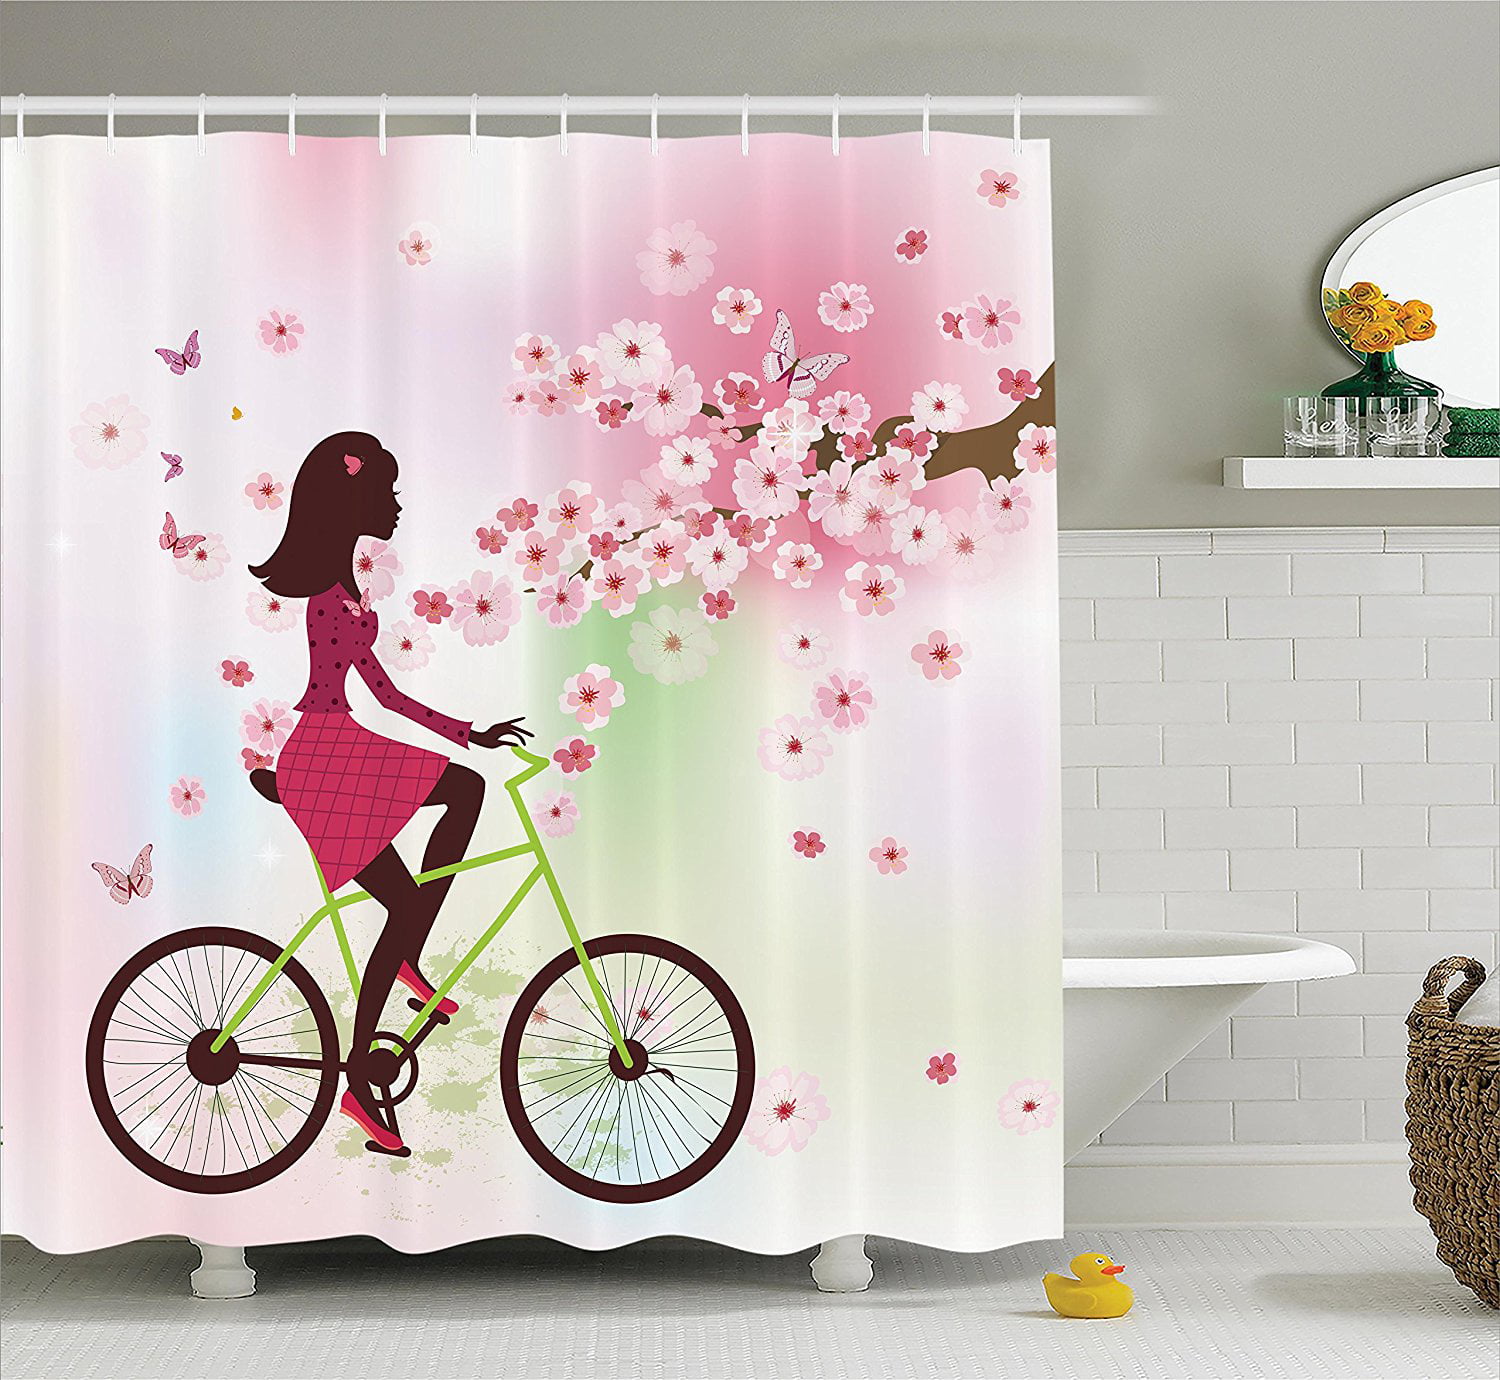 Details about   Autumn Forest Jungle Trees Road Scenic Fabric Shower Curtain Set Bath Decor 72" 